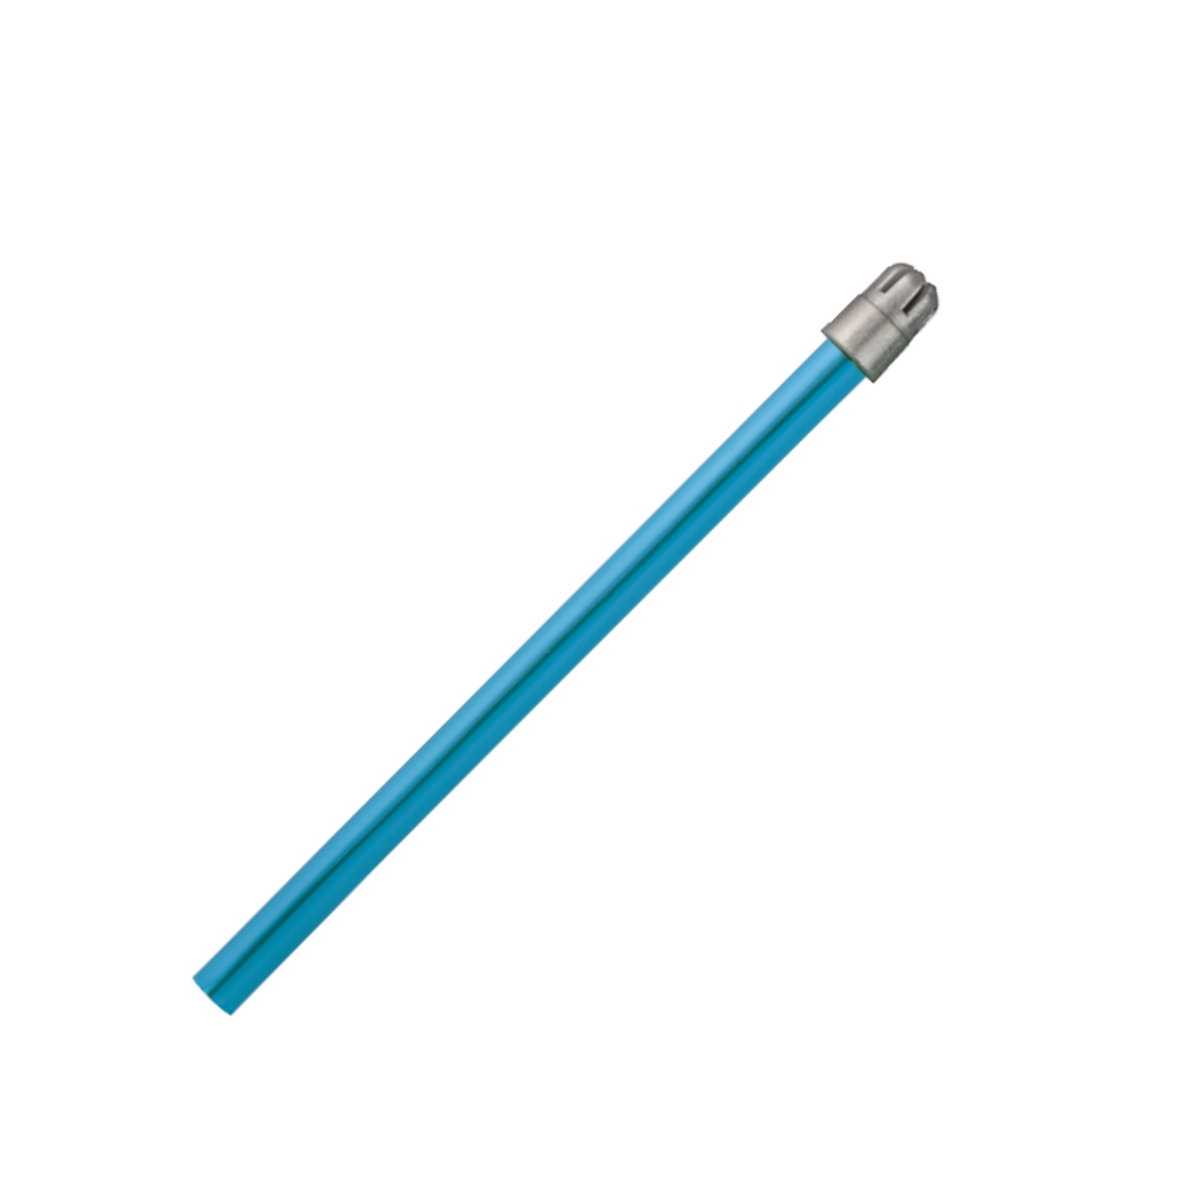 Monoart Speichelsauger 12,5 cm - Farbe: lagunablau